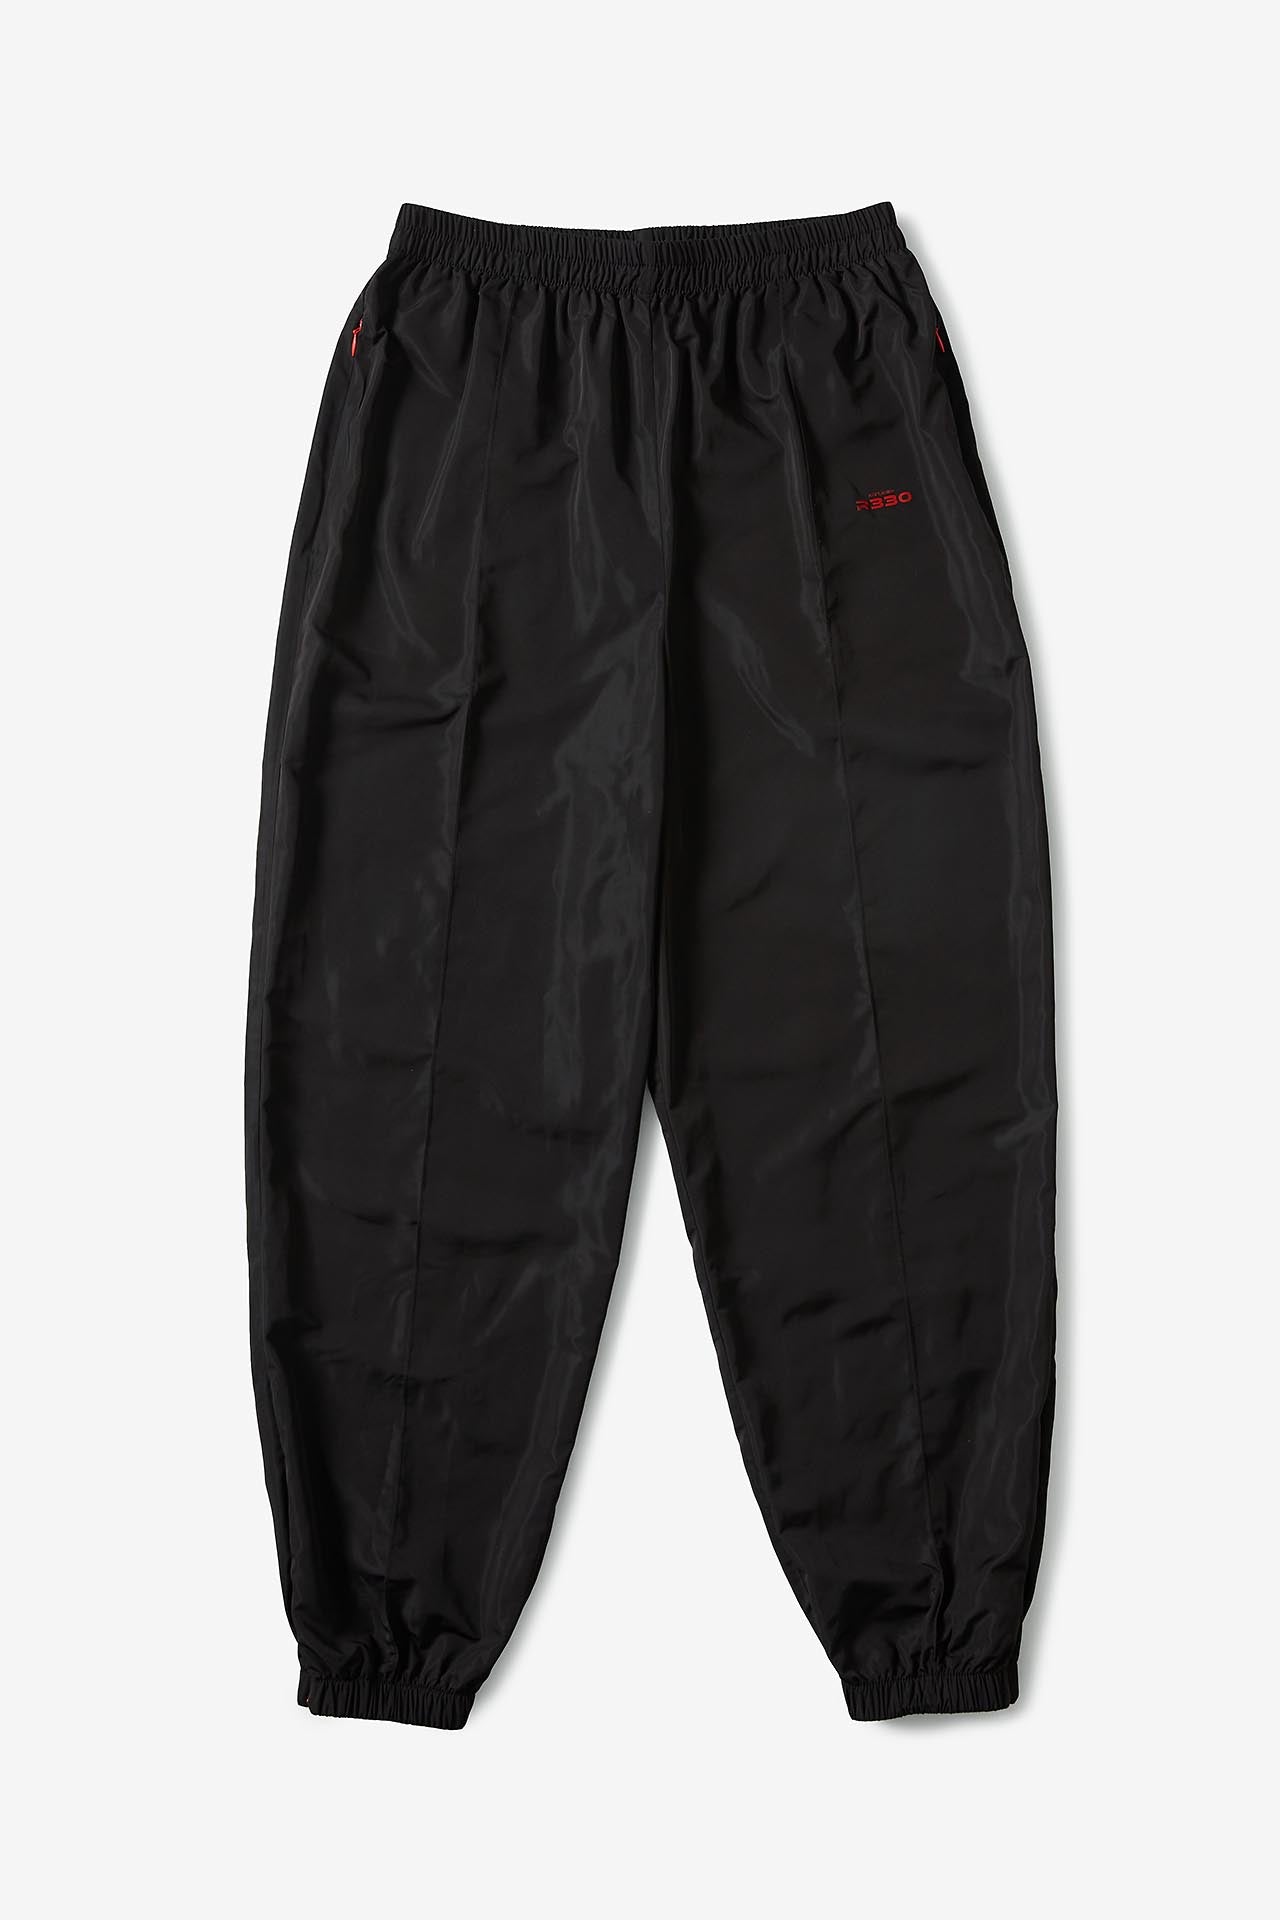 studior330 / Herb Ritts Shorts pants XS acofastferragem